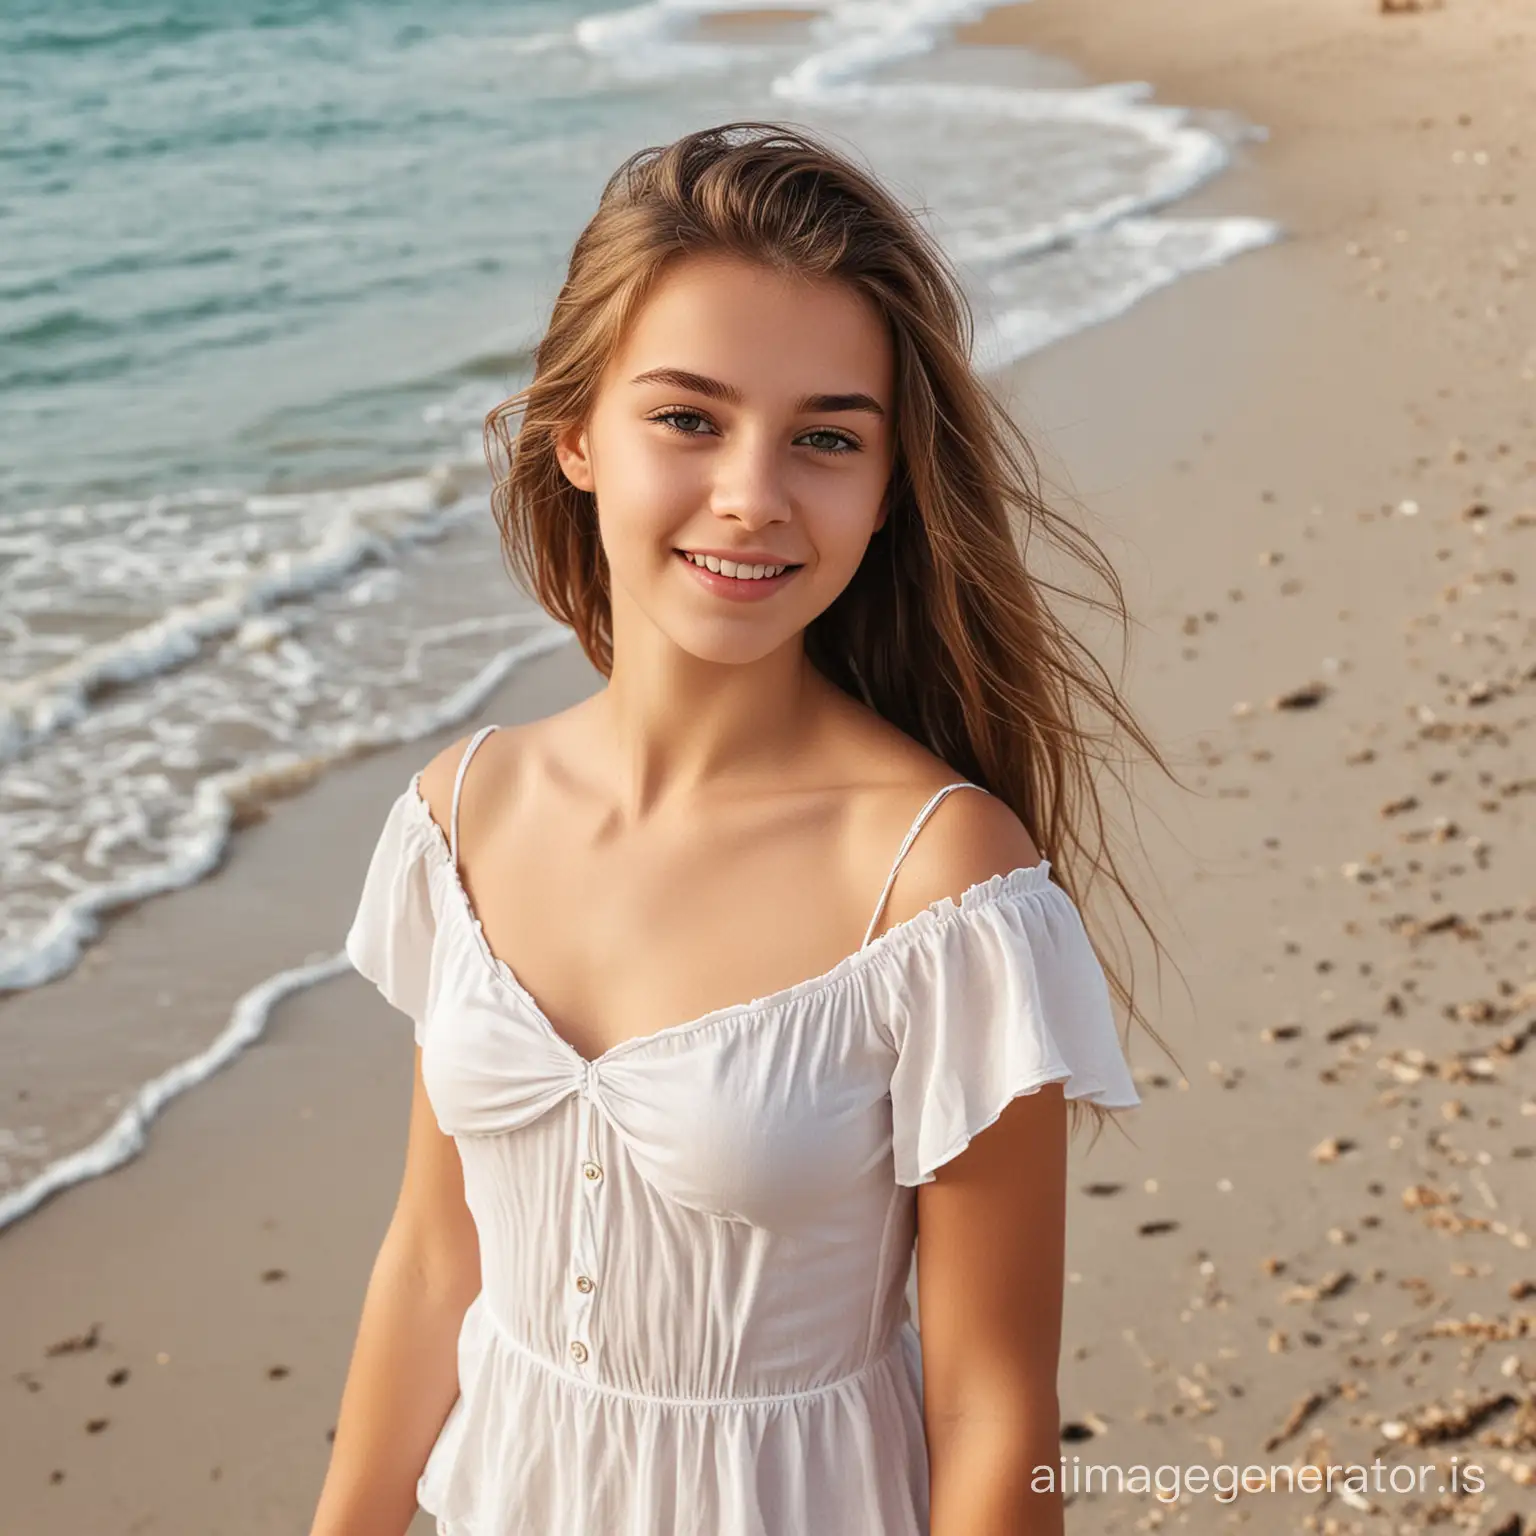 Cute european young teen girl on beach